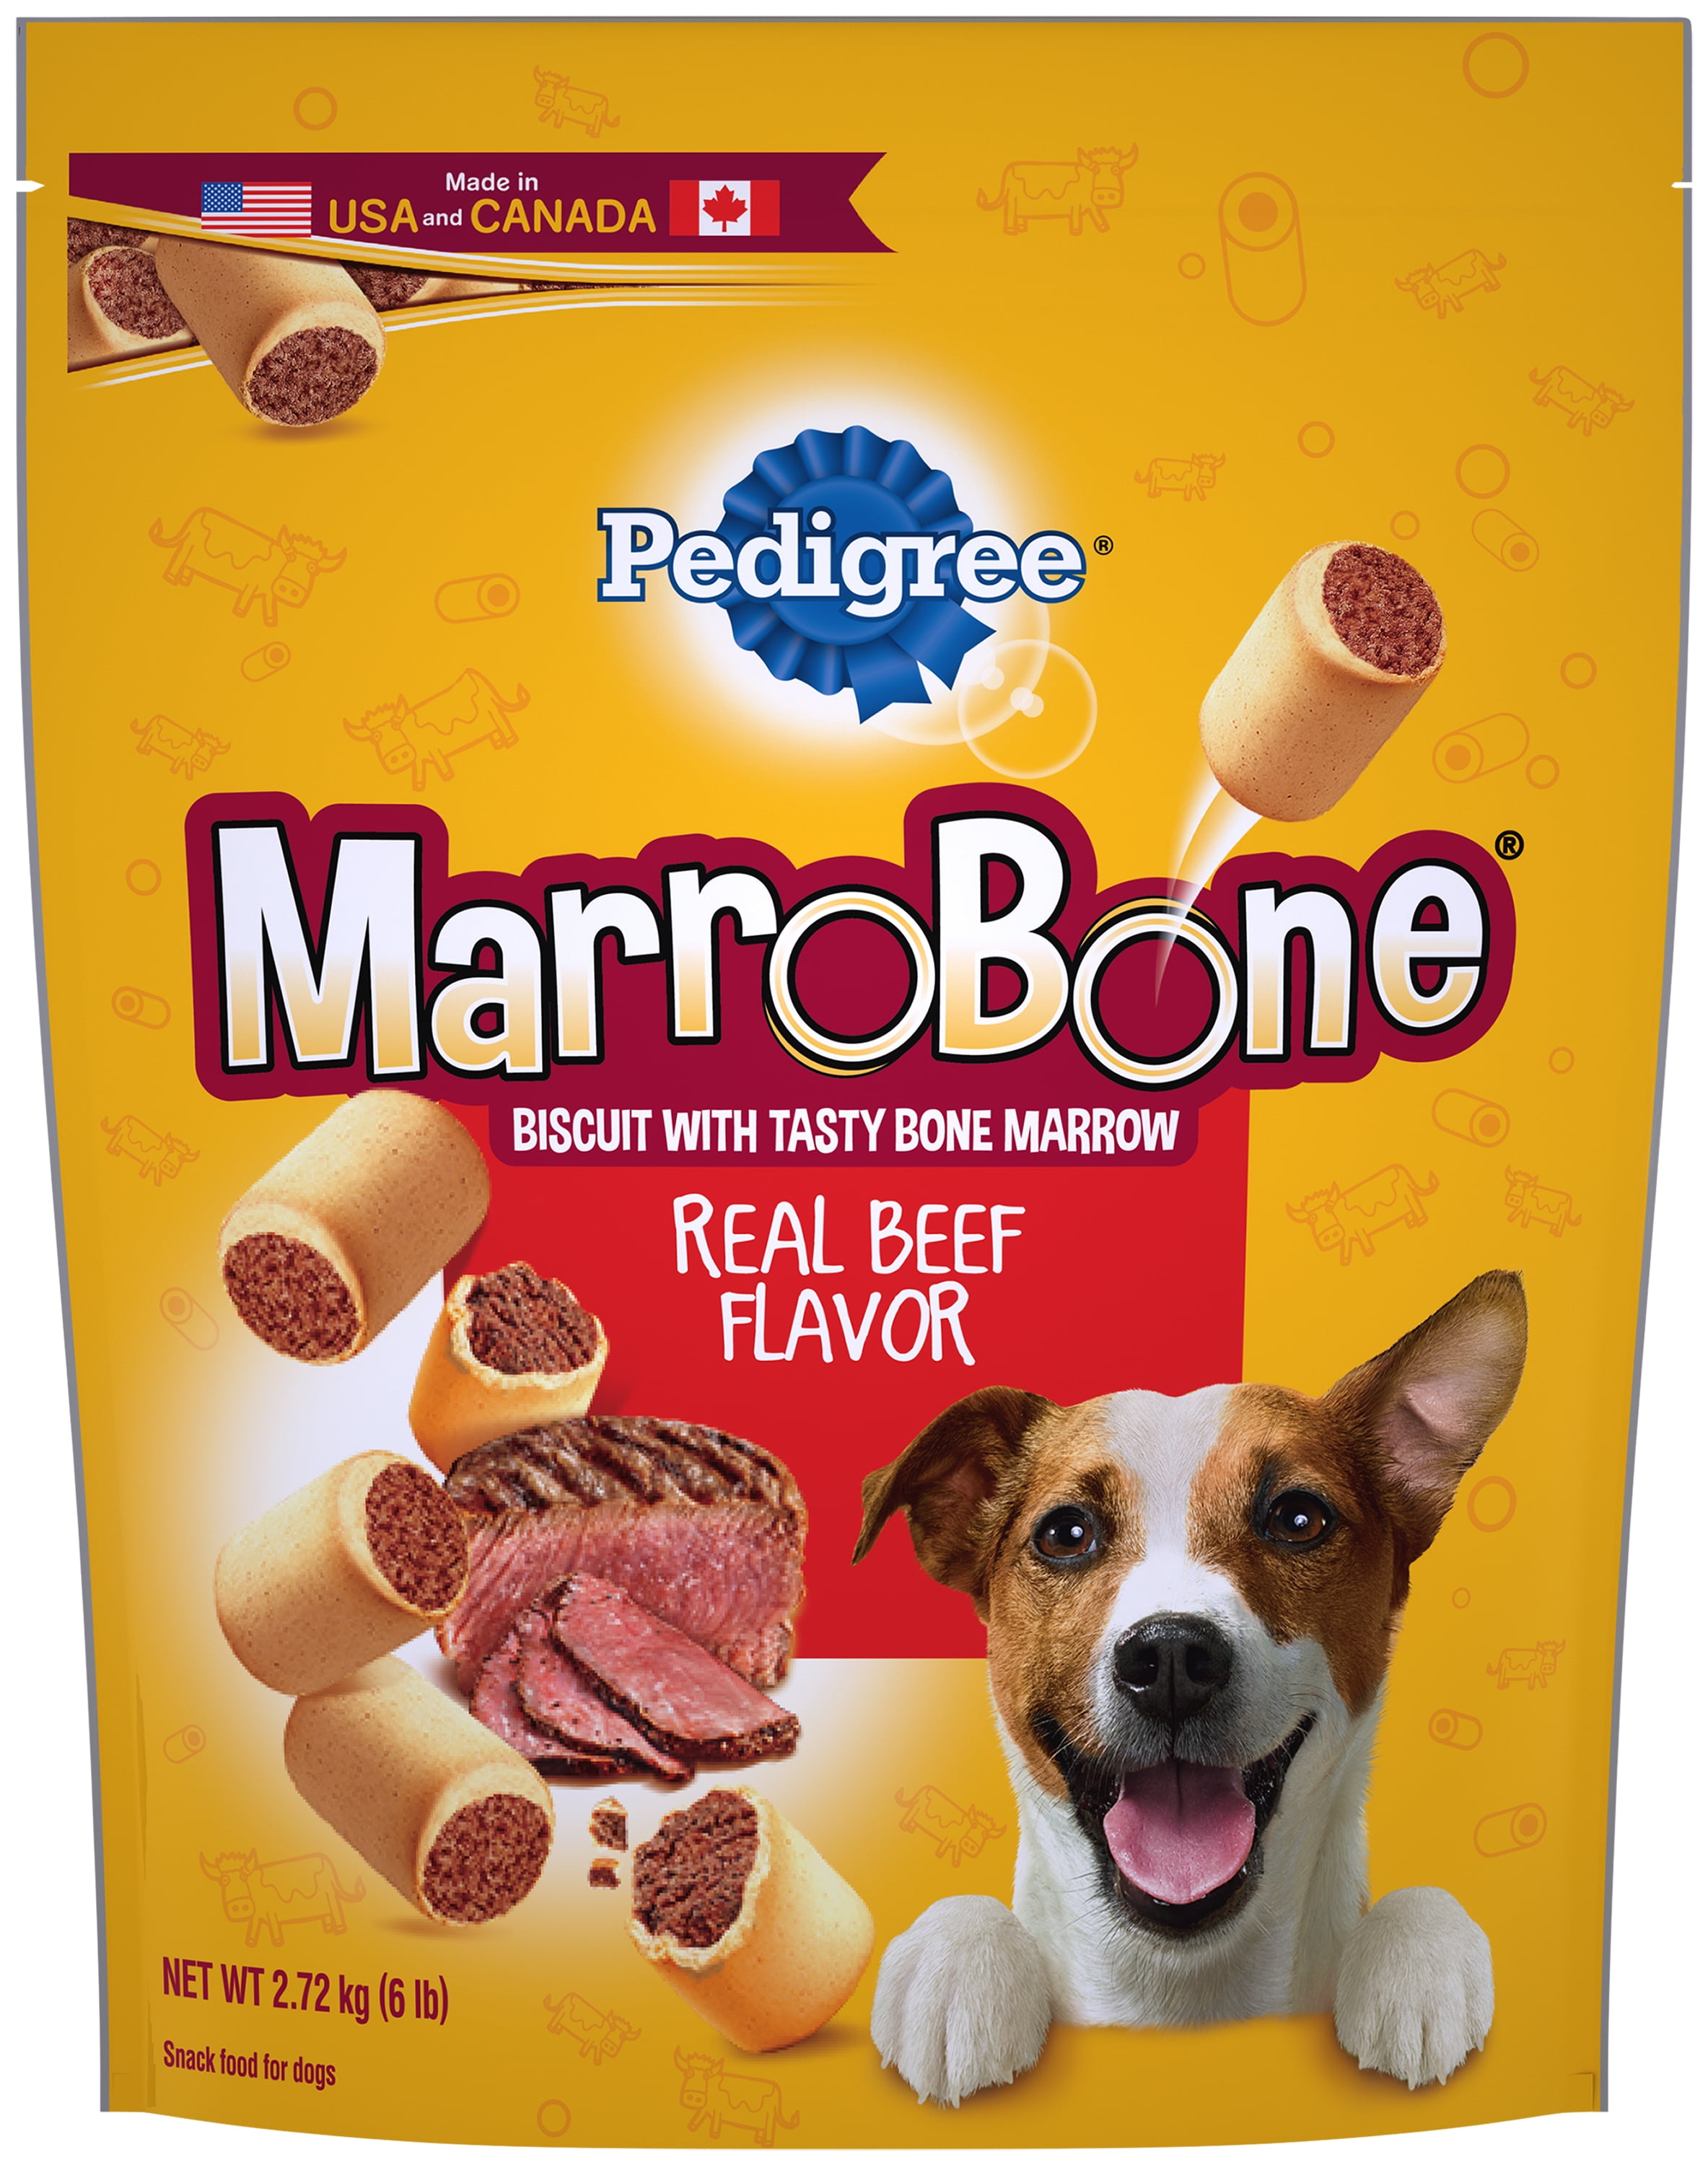 Pedigree dog treats